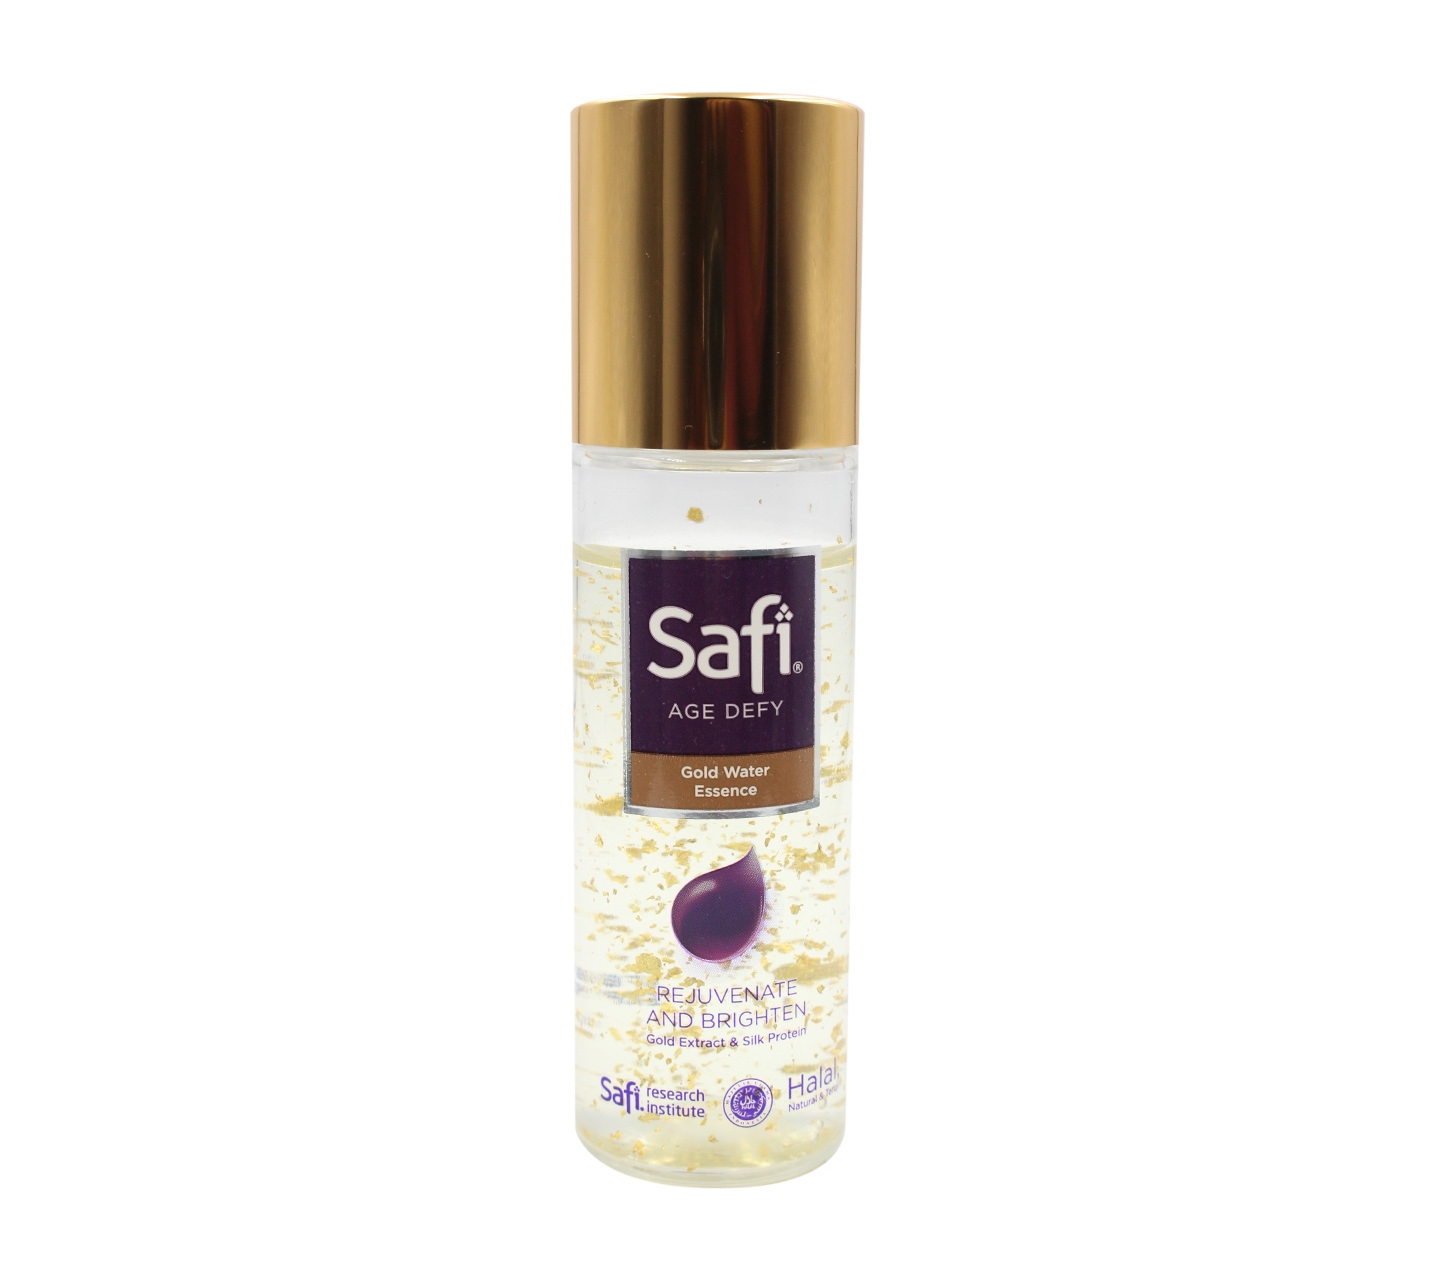 Safi Age Defy Gold Water Essence Skin Care